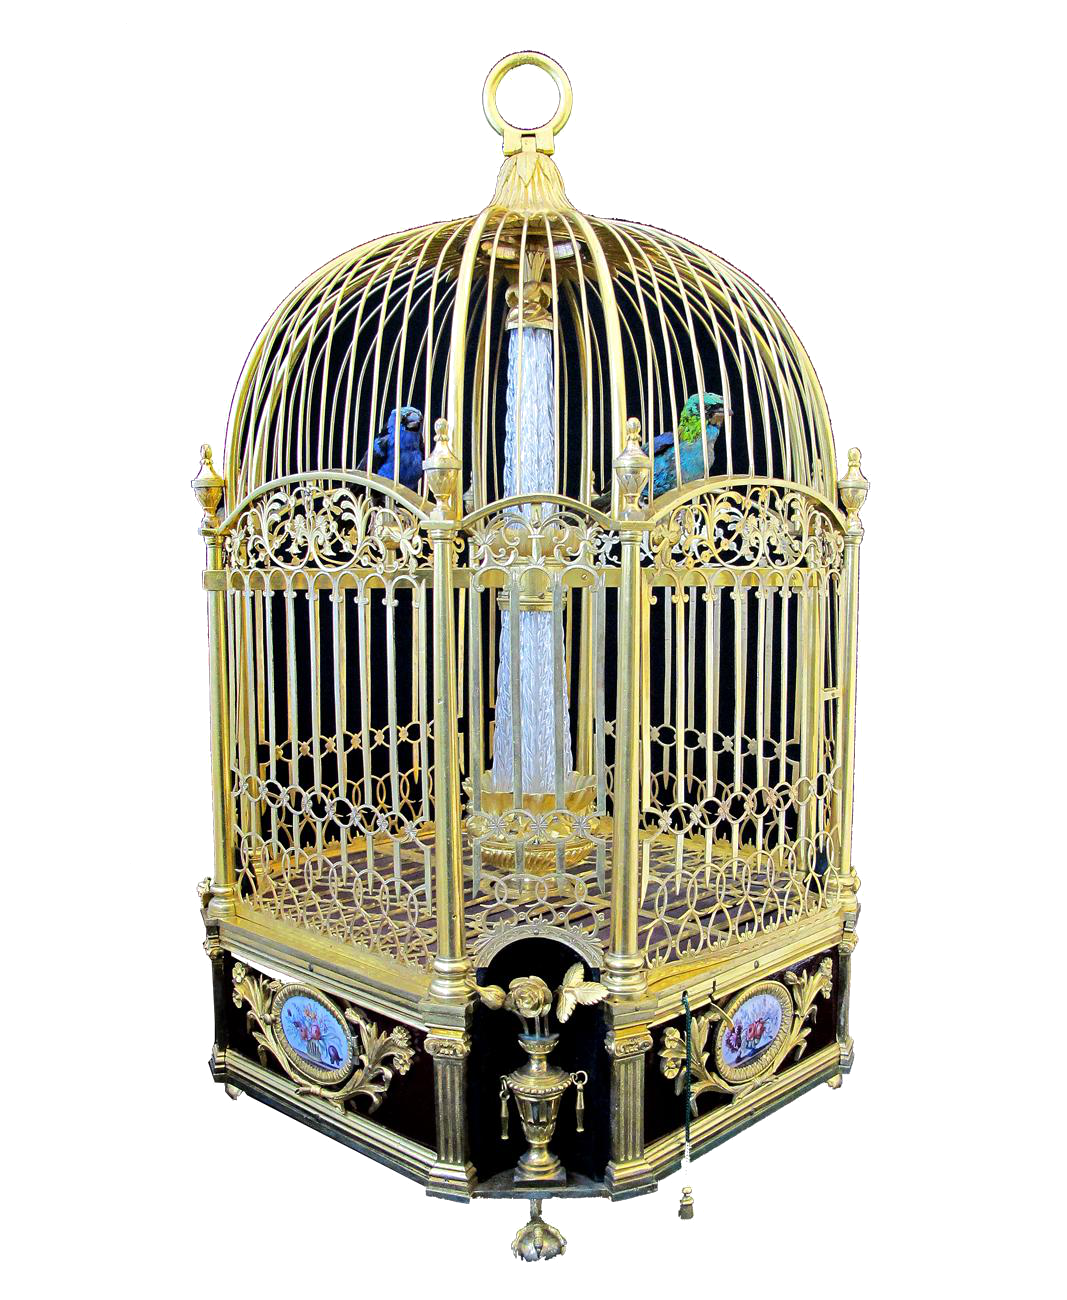 Jaque-Drotz: Reloj jaula con pájaros autómatas. Foto y video: http://galeriedesmerveilles.jaquet-droz.com/es/p%C3%A1jaros-cantores/singing-bird-cage